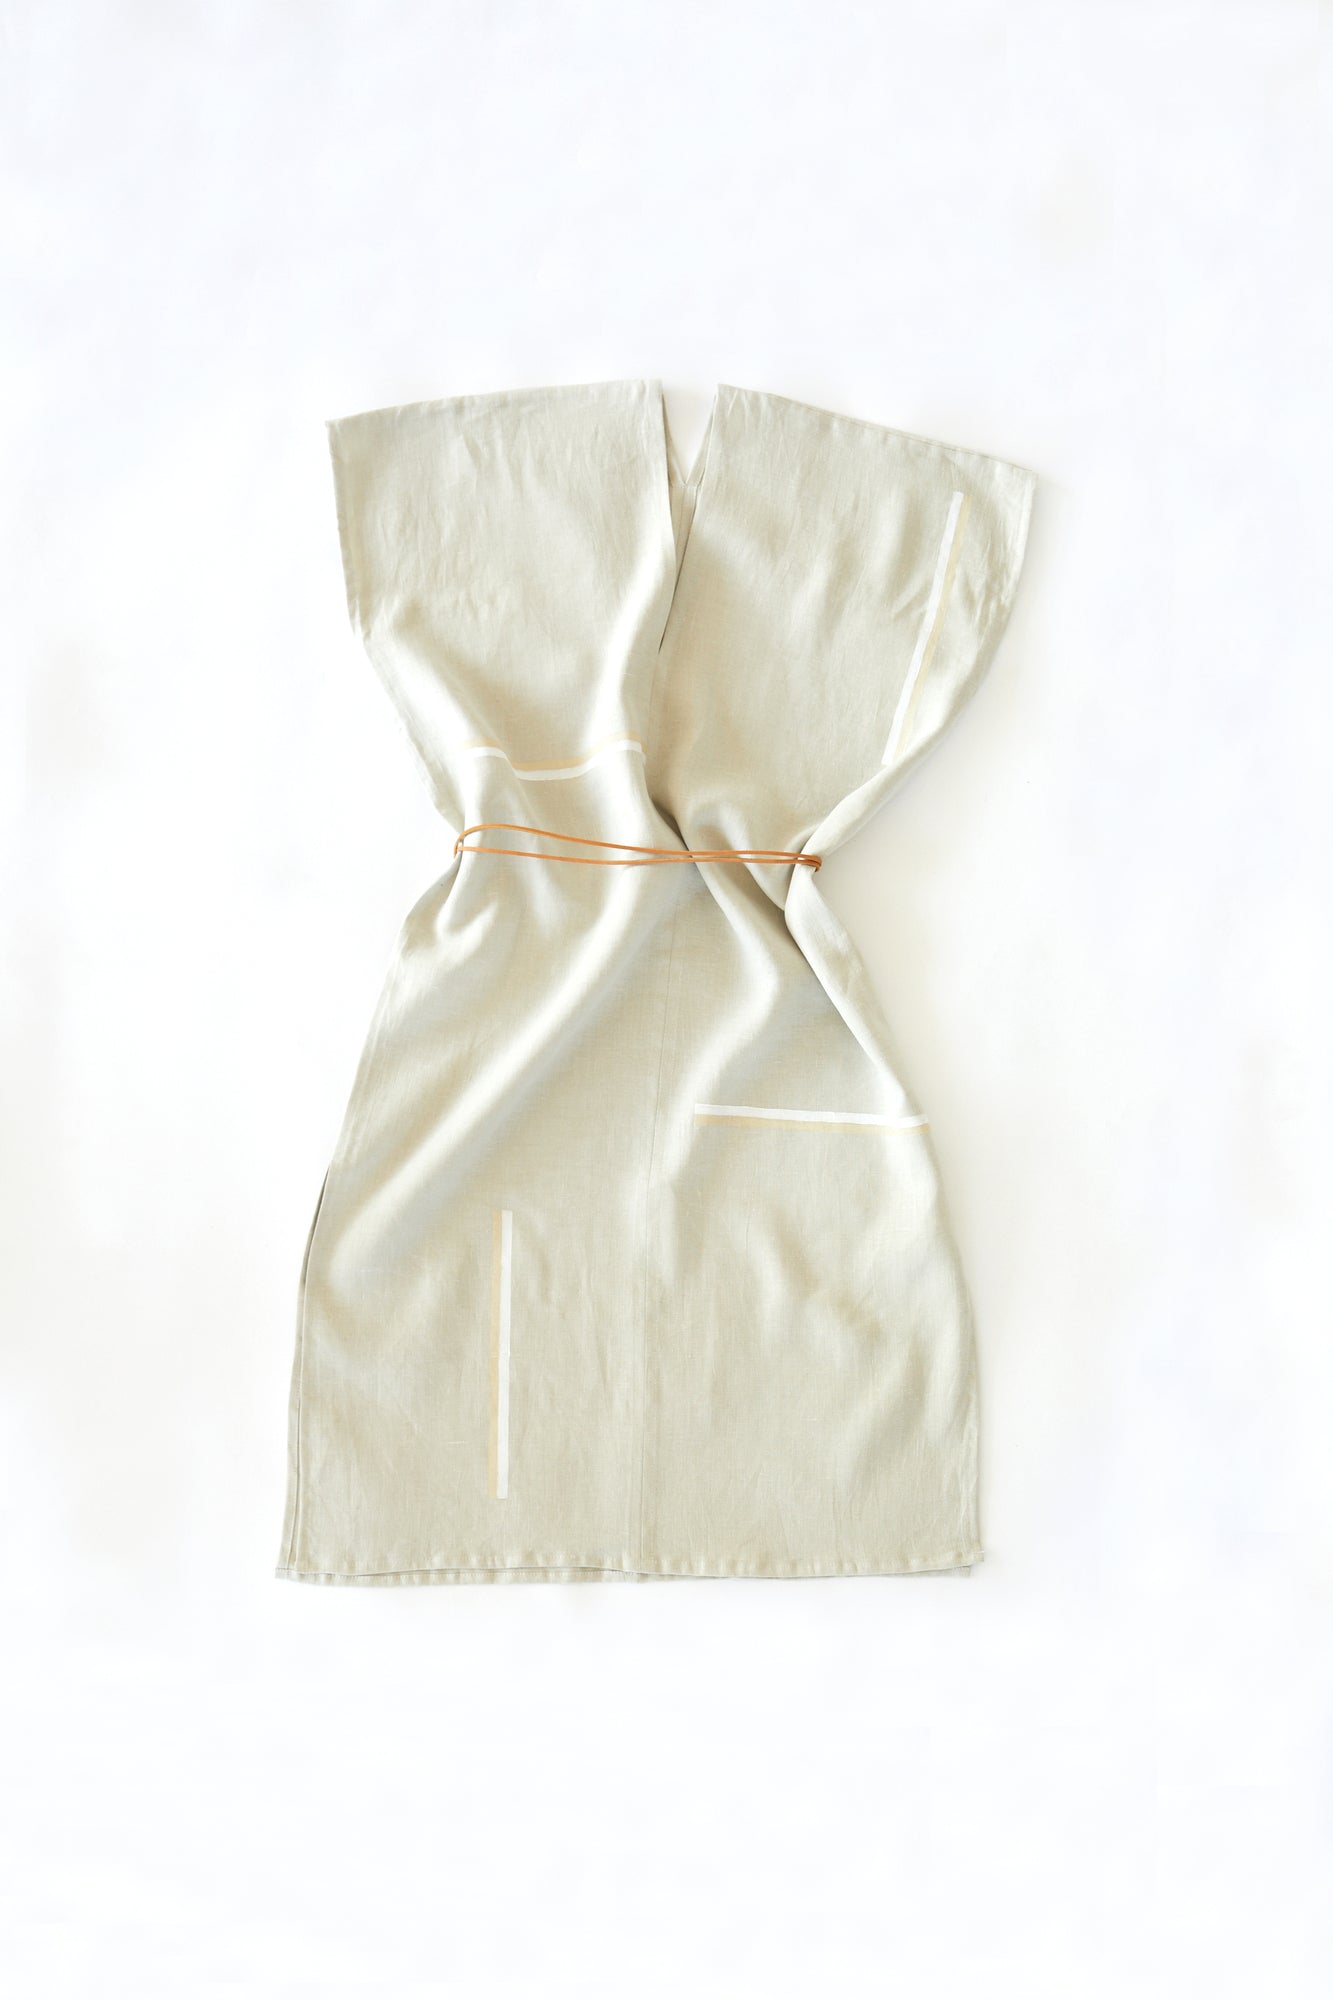 Sample Sale K'un Natural House Dress - 1 available